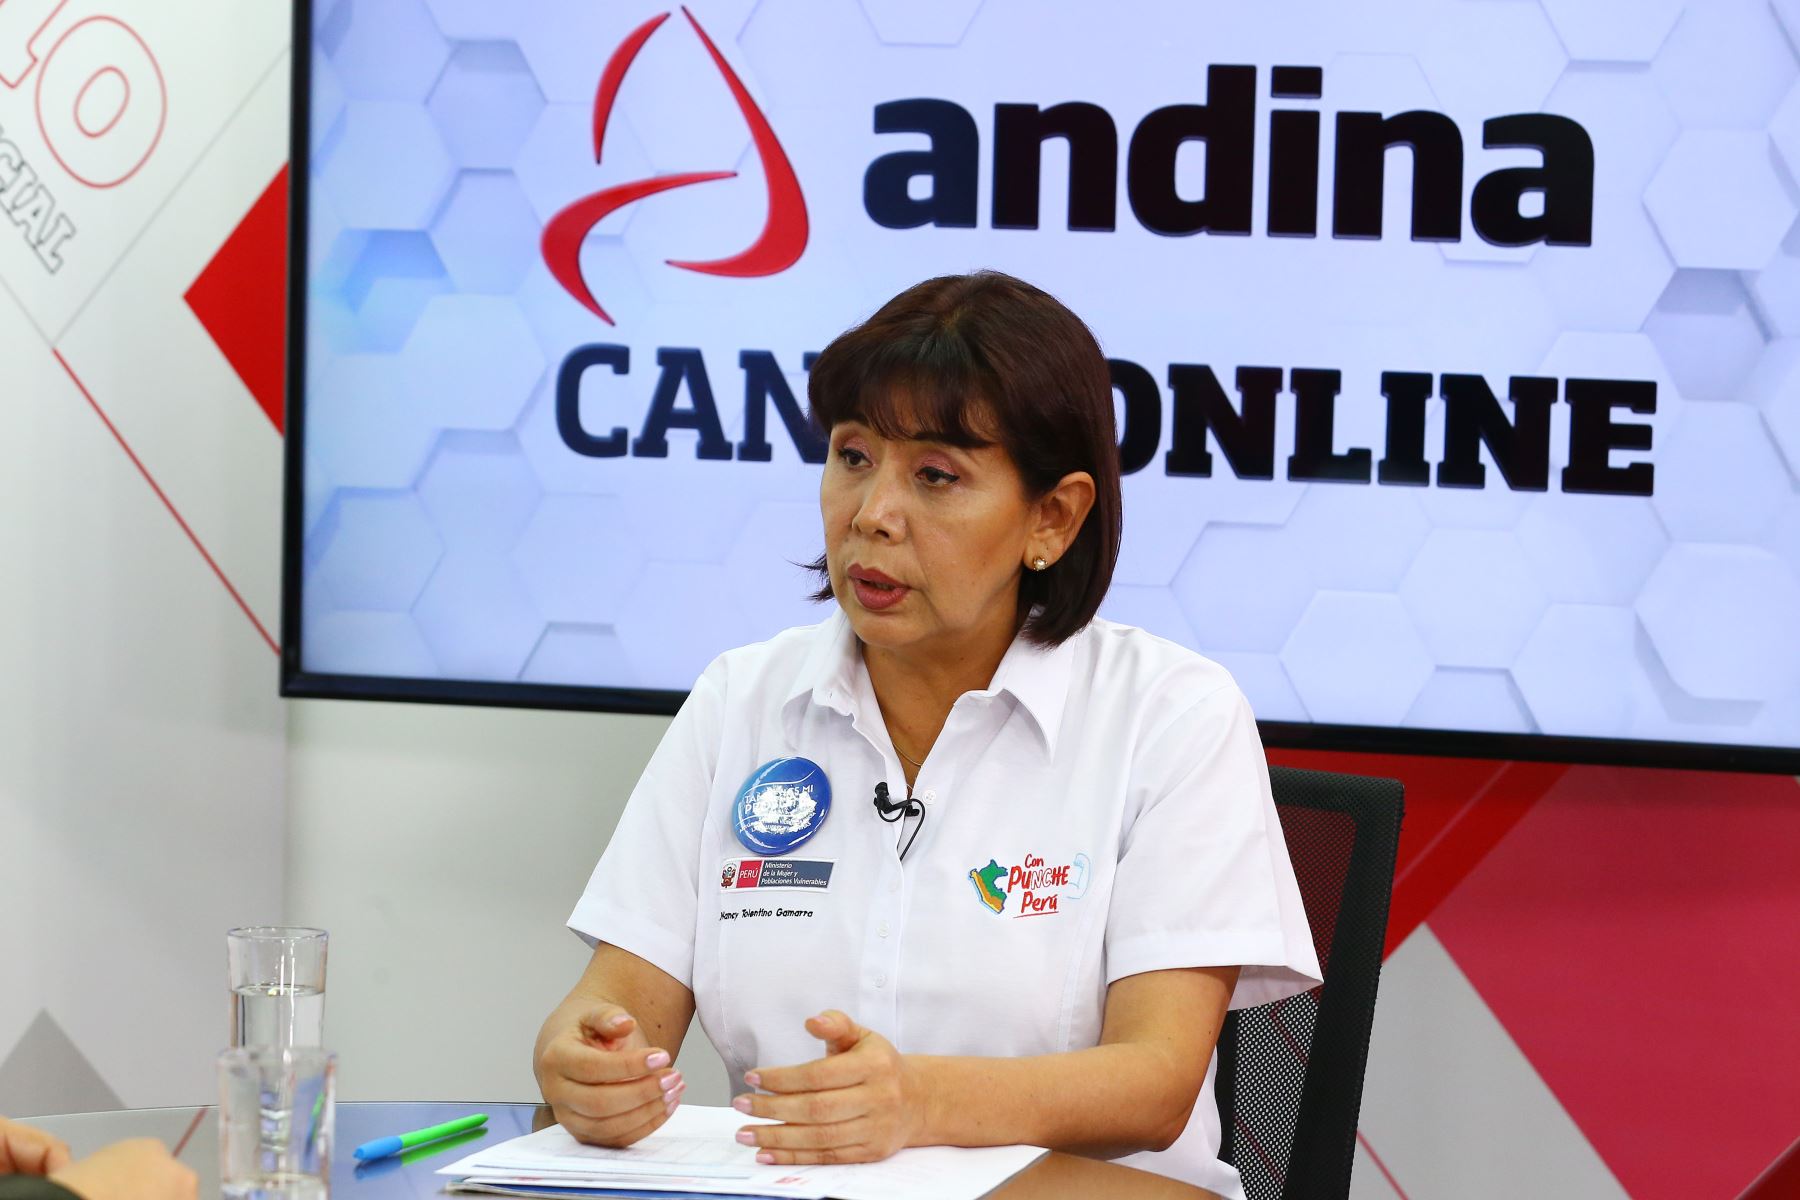 Nancy Tolentino, ministra de la Mujer, visitó el set de Andina Canal Online. ANDINA/Eddy Ramos